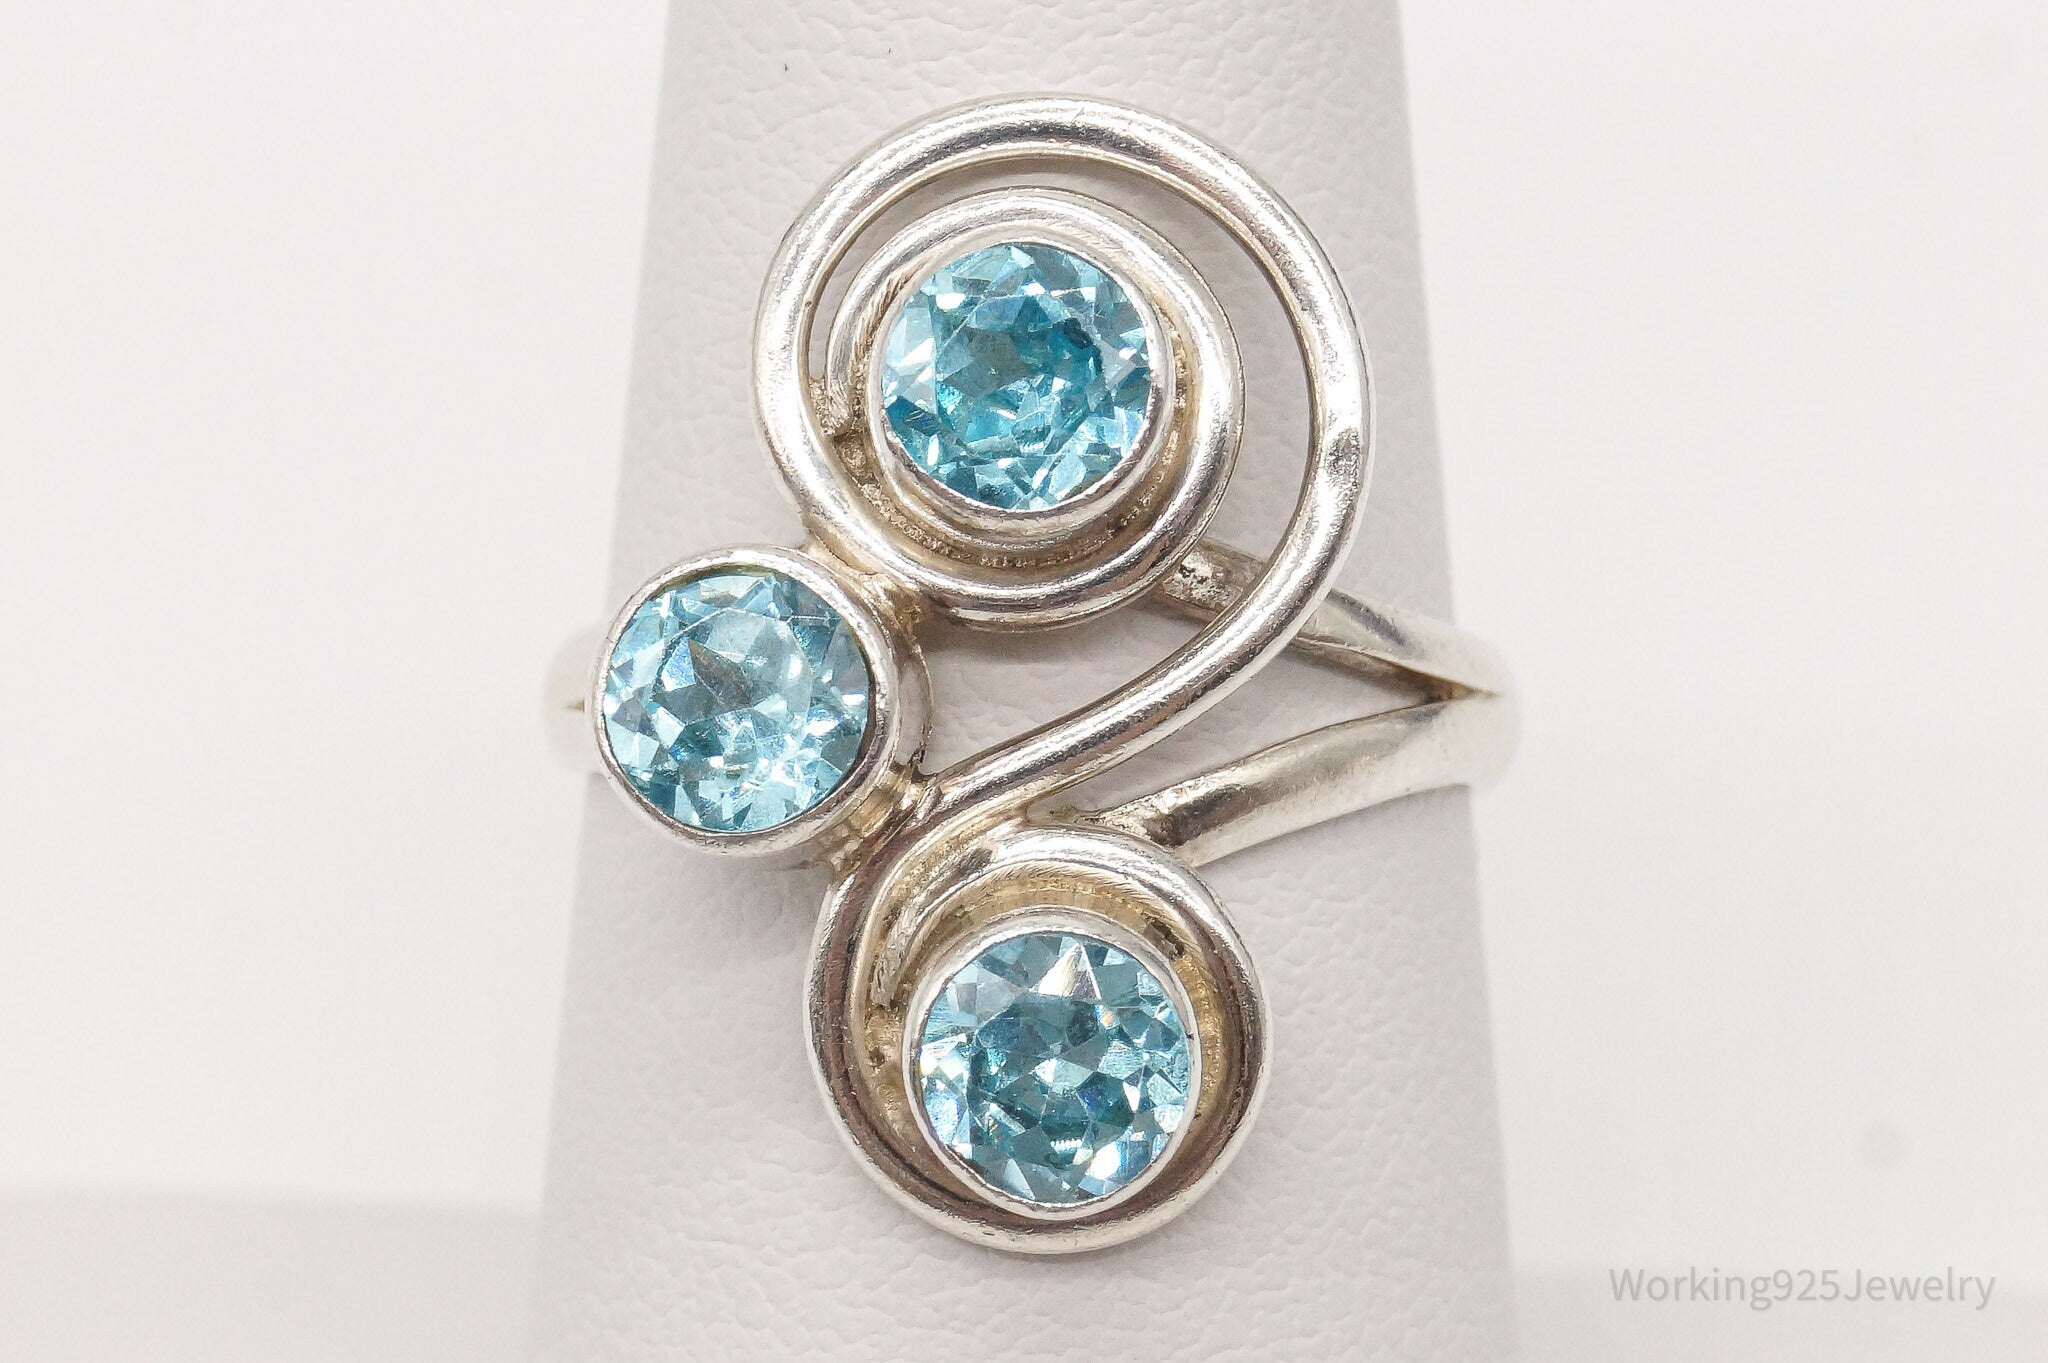 Vintage Aquamarine Sterling Silver Ring - Size 7